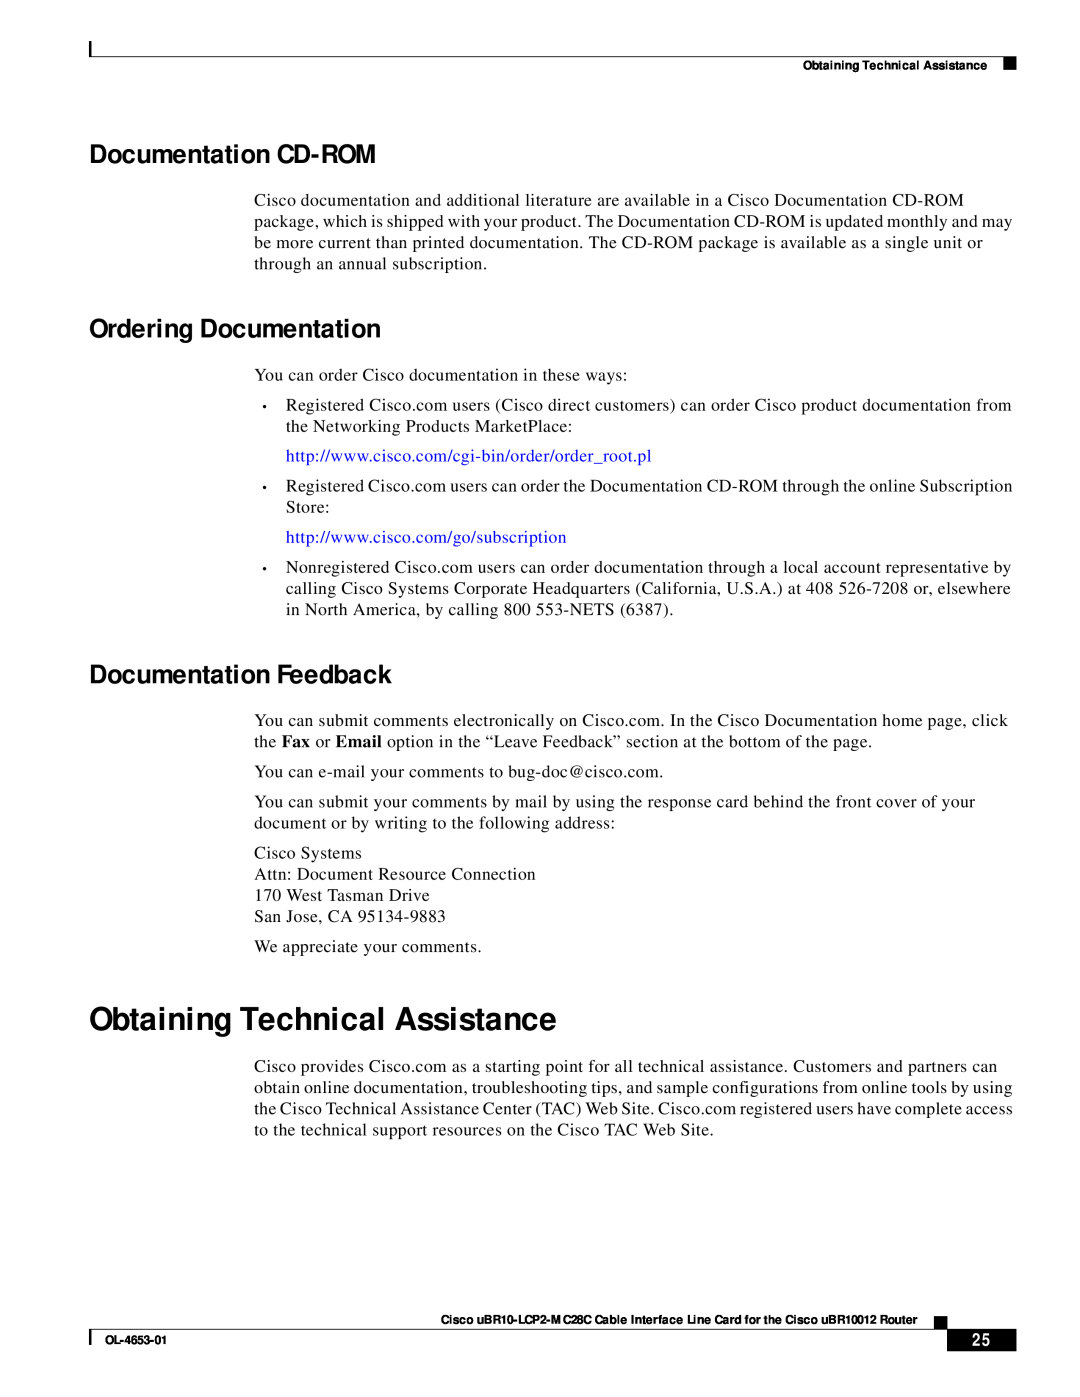 Cisco Systems uBR10-LCP2-MC28C manual Obtaining Technical Assistance, Documentation CD-ROM, Ordering Documentation 